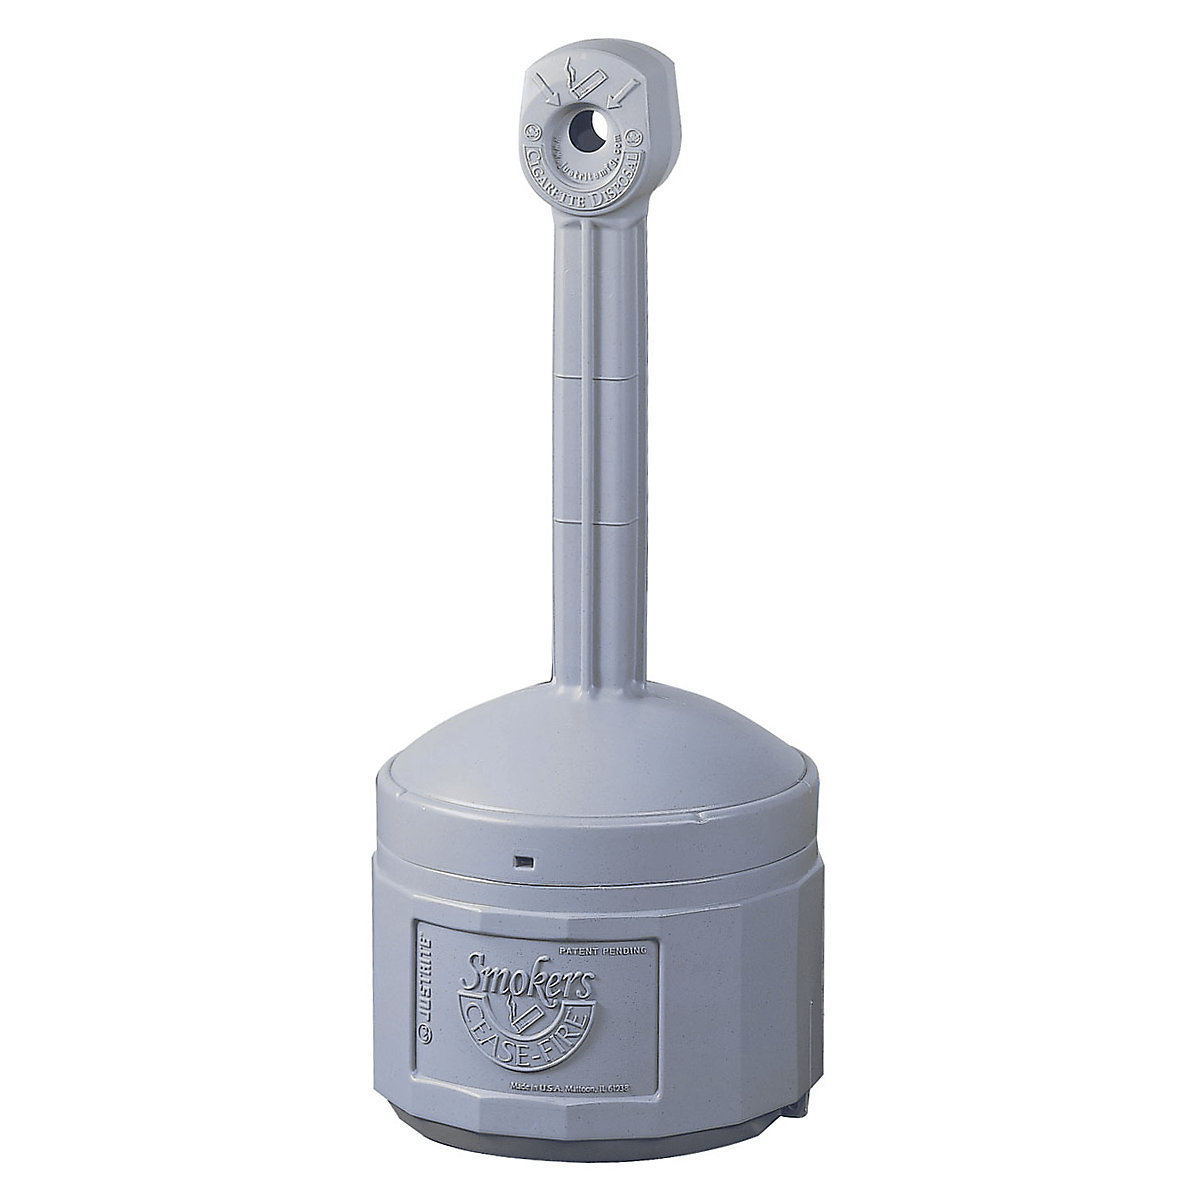 Safety pedestal ashtray, self-extinguishing – Justrite